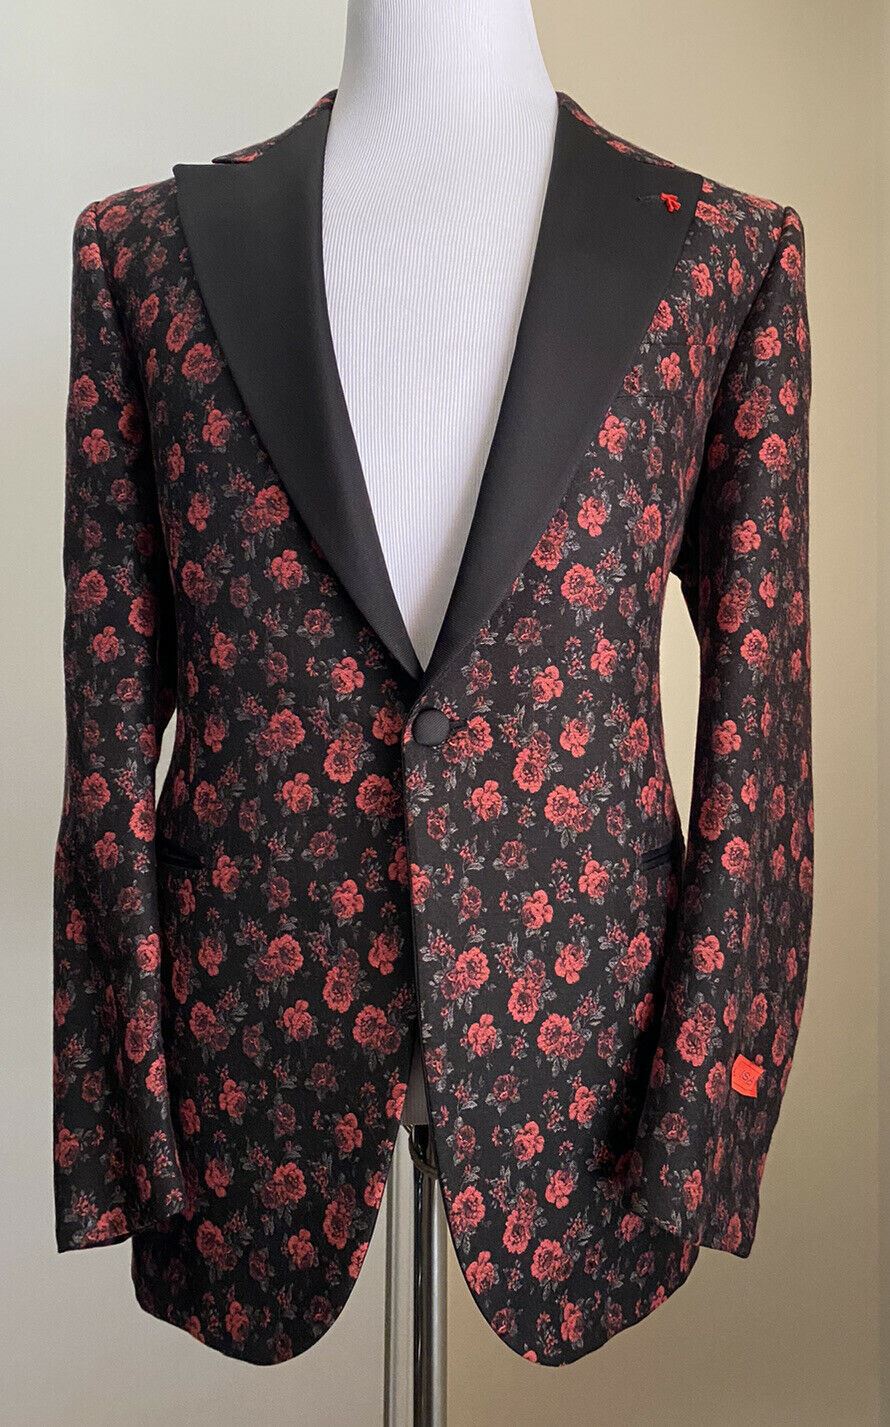 NWT $4150 Isaia Floral Jacquard Tuxedo Sport Coat Jacket Black/Red 38R US/48R Eu